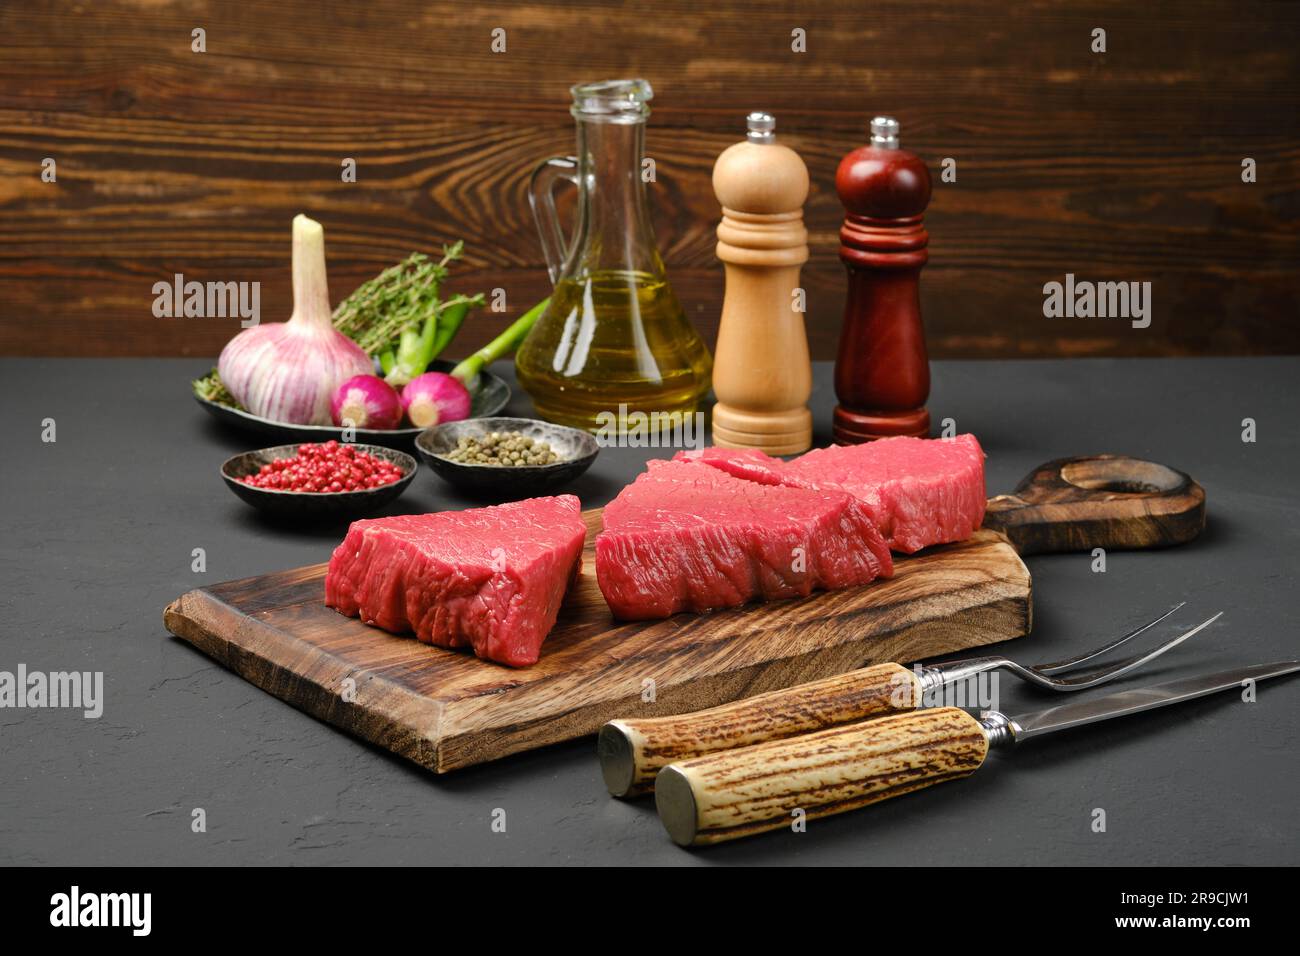 https://c8.alamy.com/comp/2R9CJW1/three-large-raw-tri-tip-loin-beef-steaks-2R9CJW1.jpg